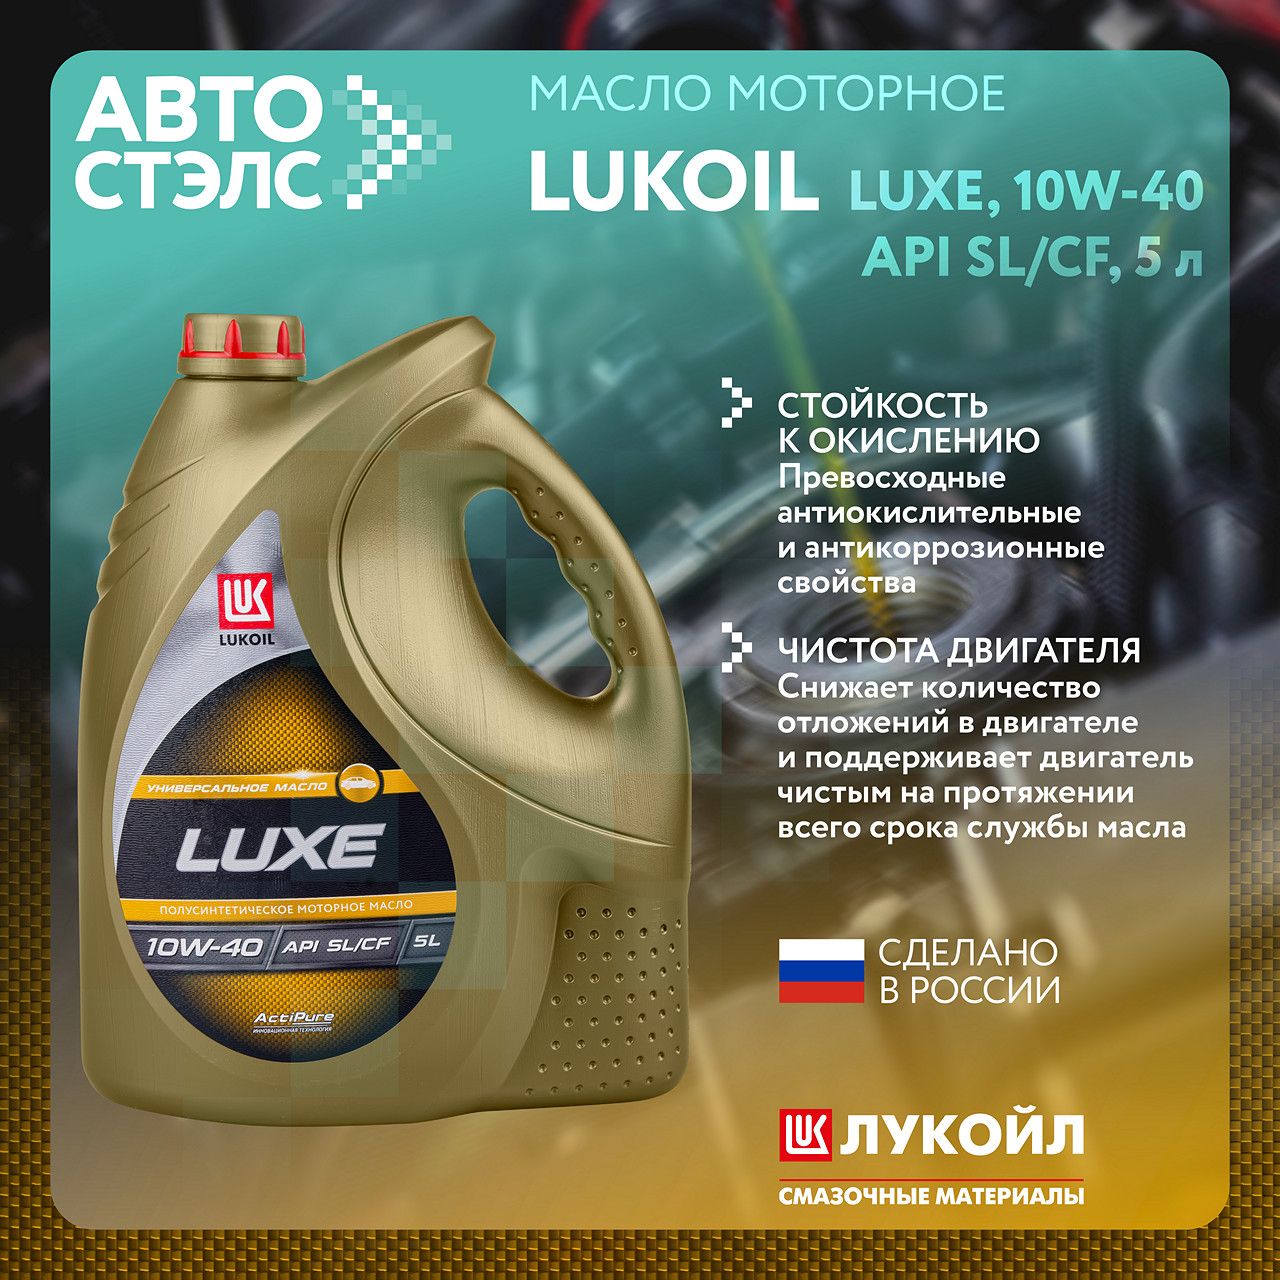 Масло лукойл 10w 40 sl. Характеристики масла Лукойл Люкс 10w 40.